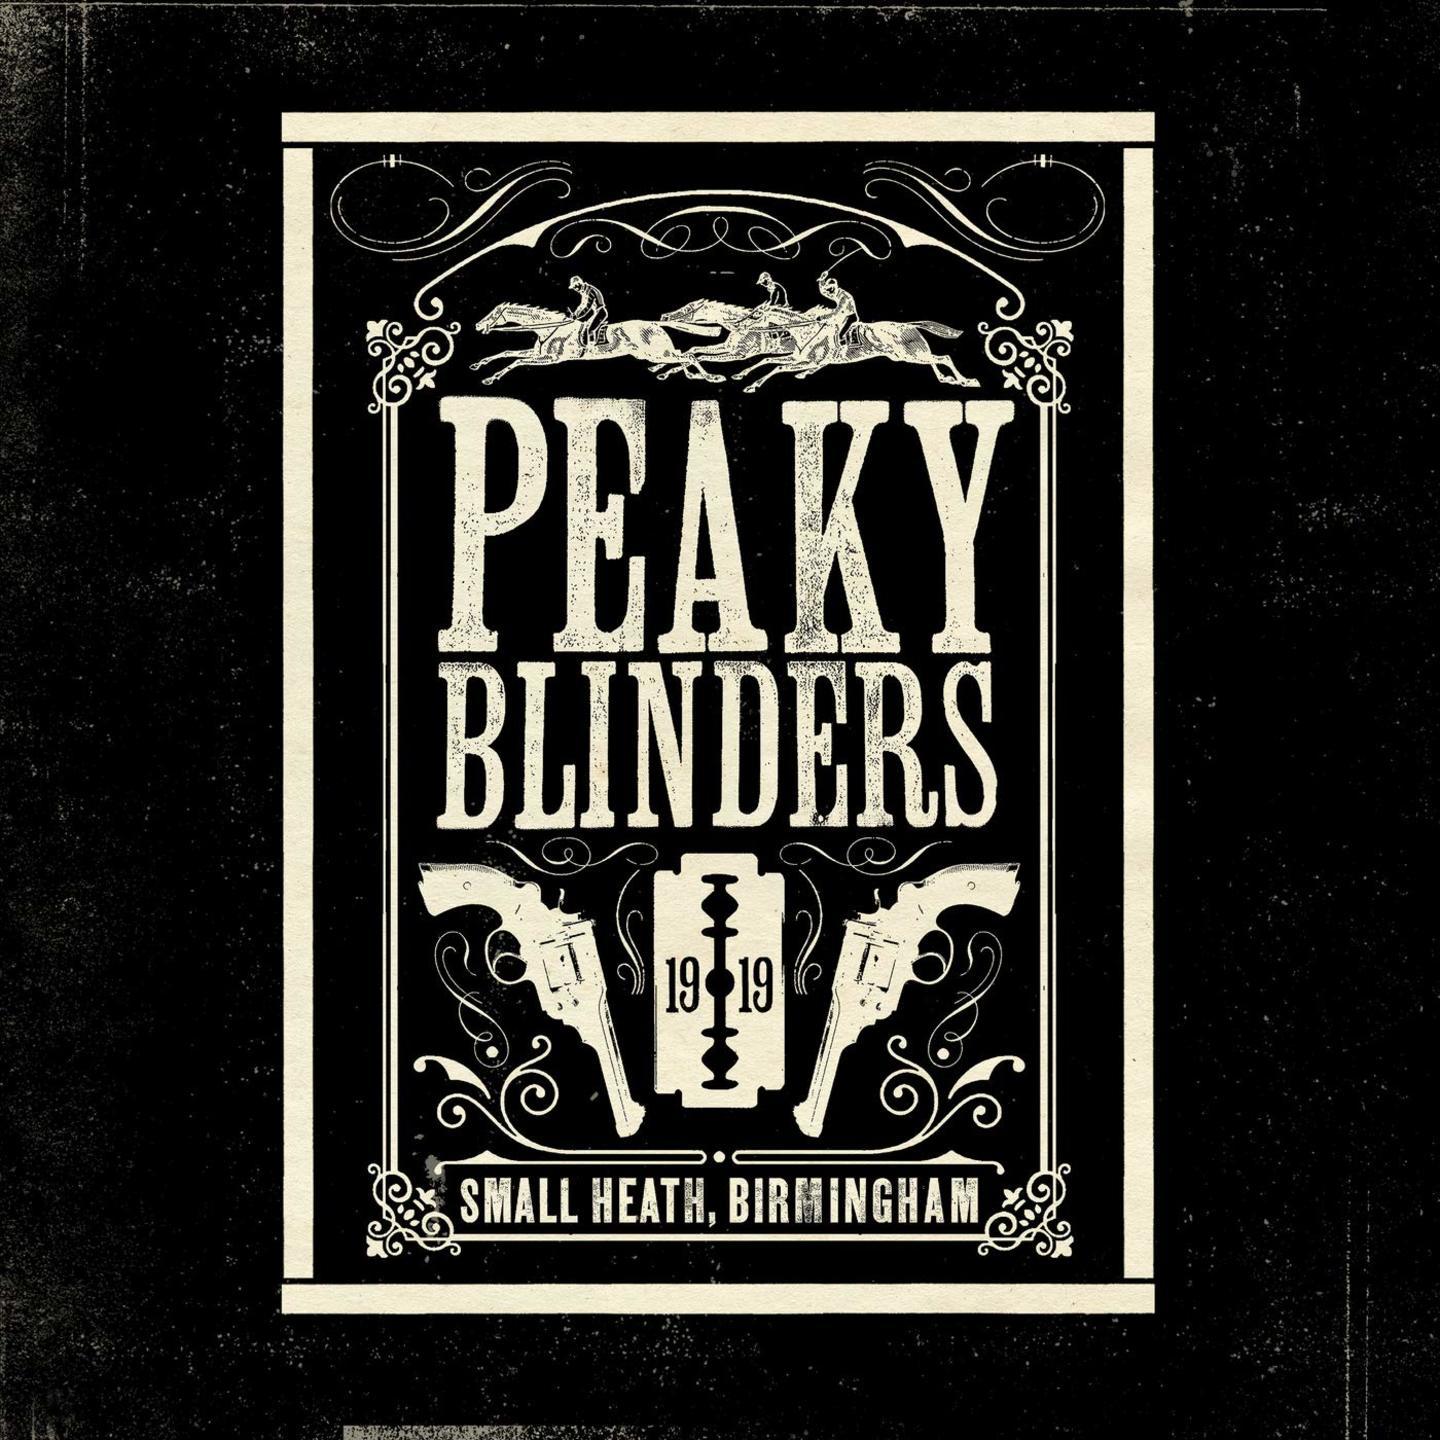 VA - Peaky Blinders Original Music From The TV Series 3xLP